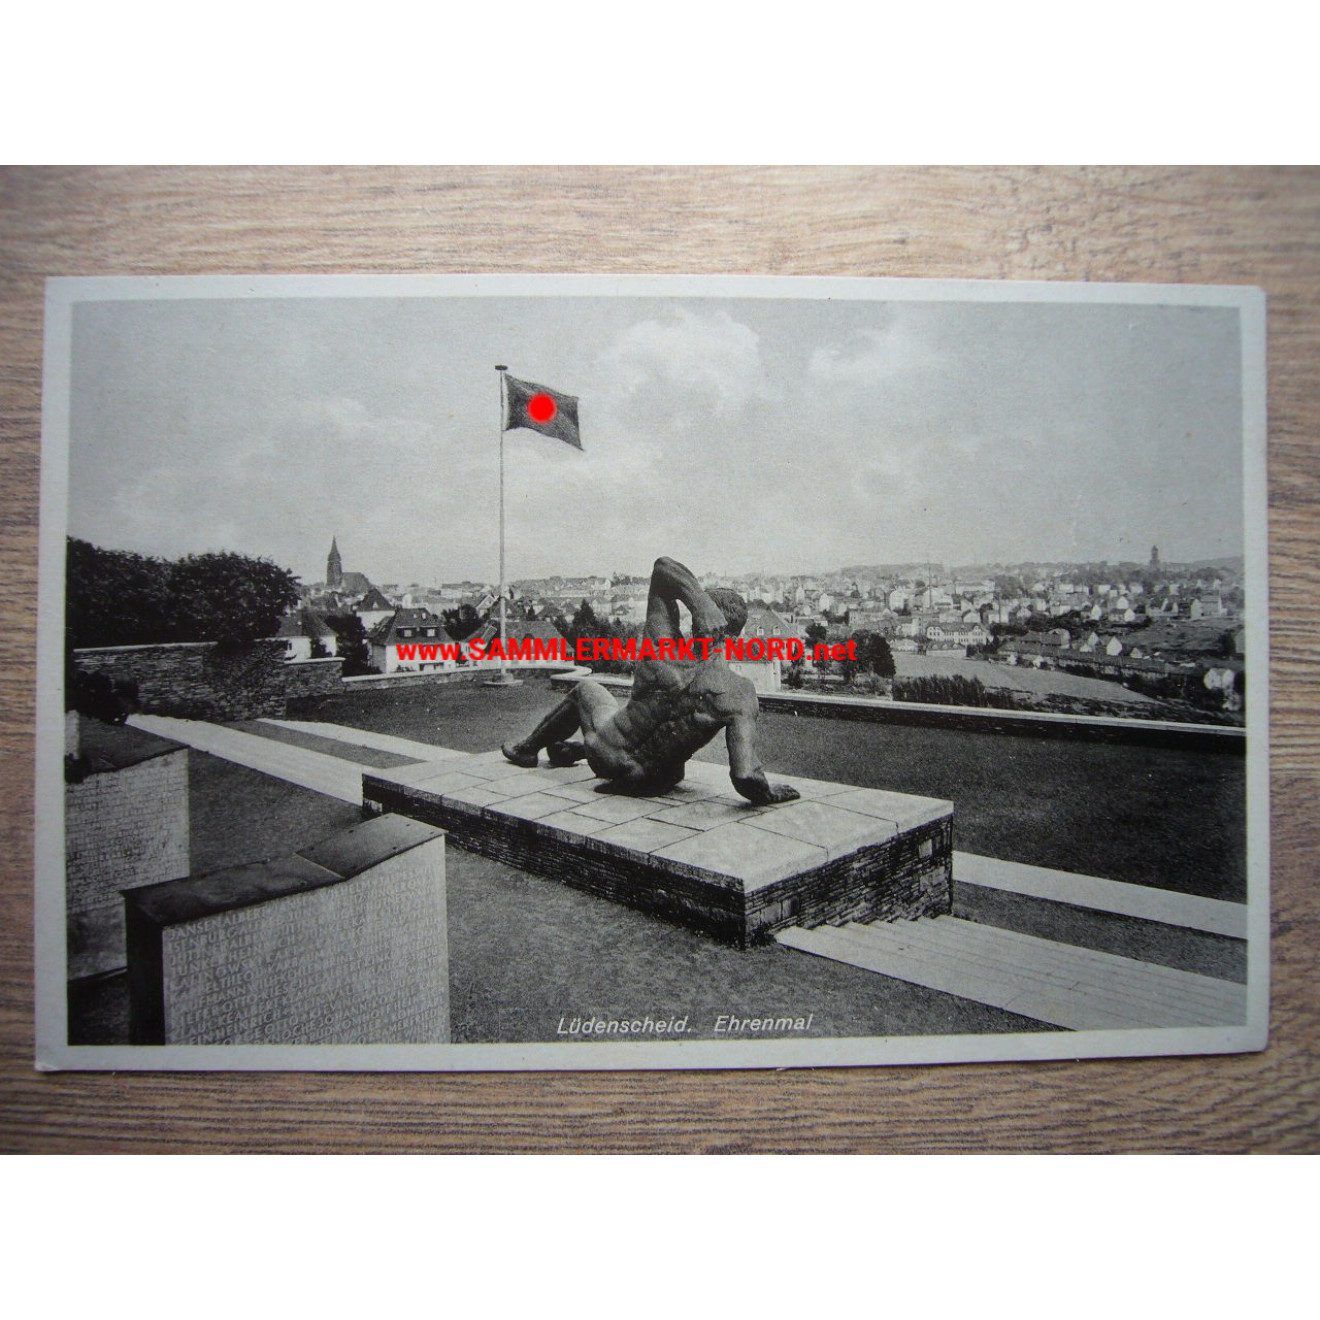 Lüdenscheid - memorial with waving swastika flag - postcard